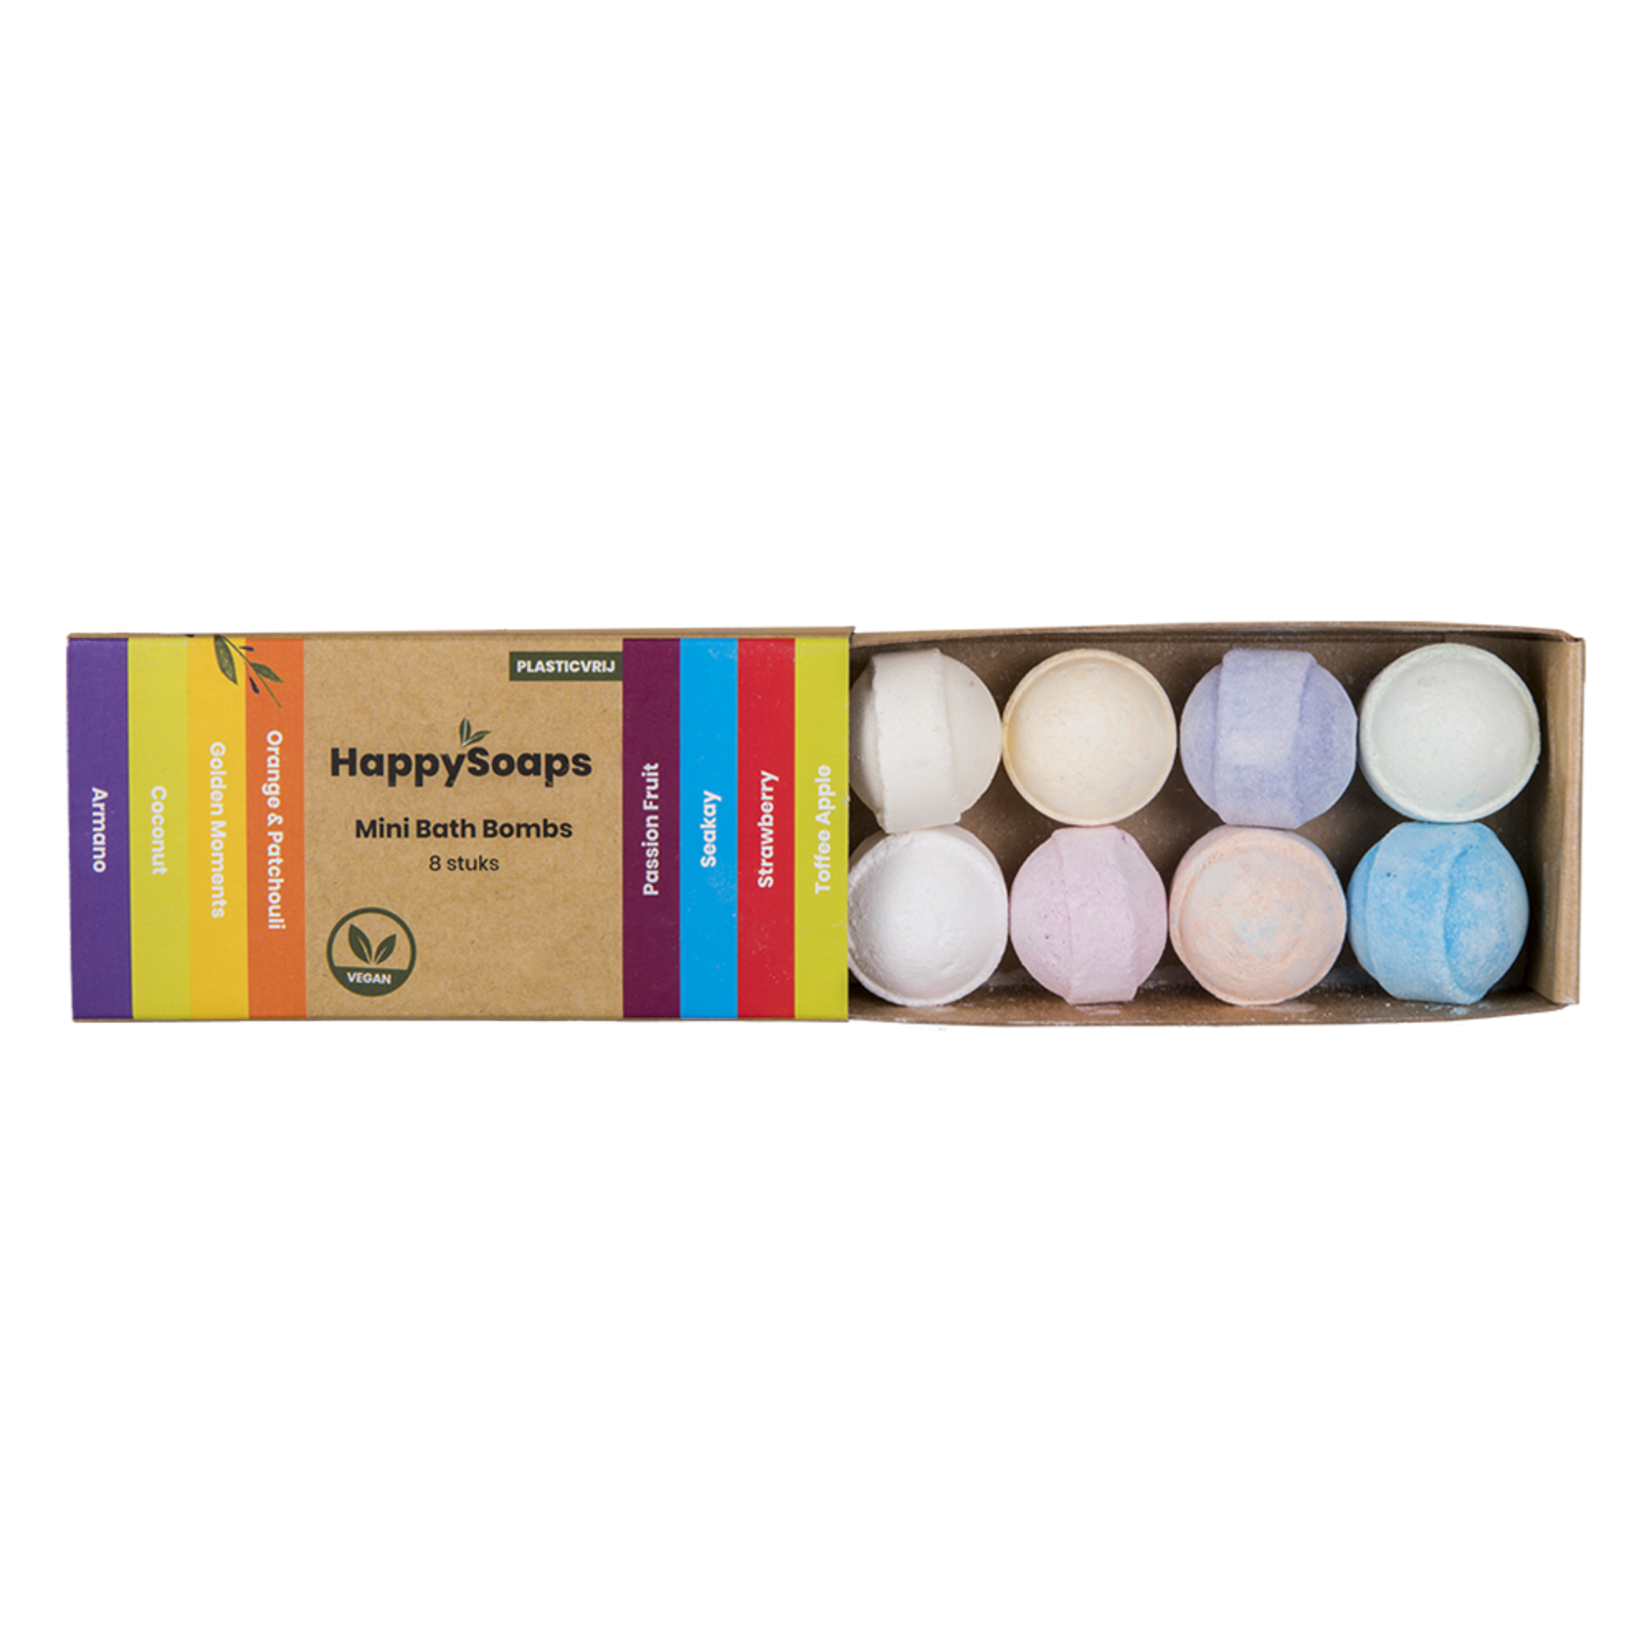 The Happy Soaps Happy Soaps Bath Bomb Herbal Sweet